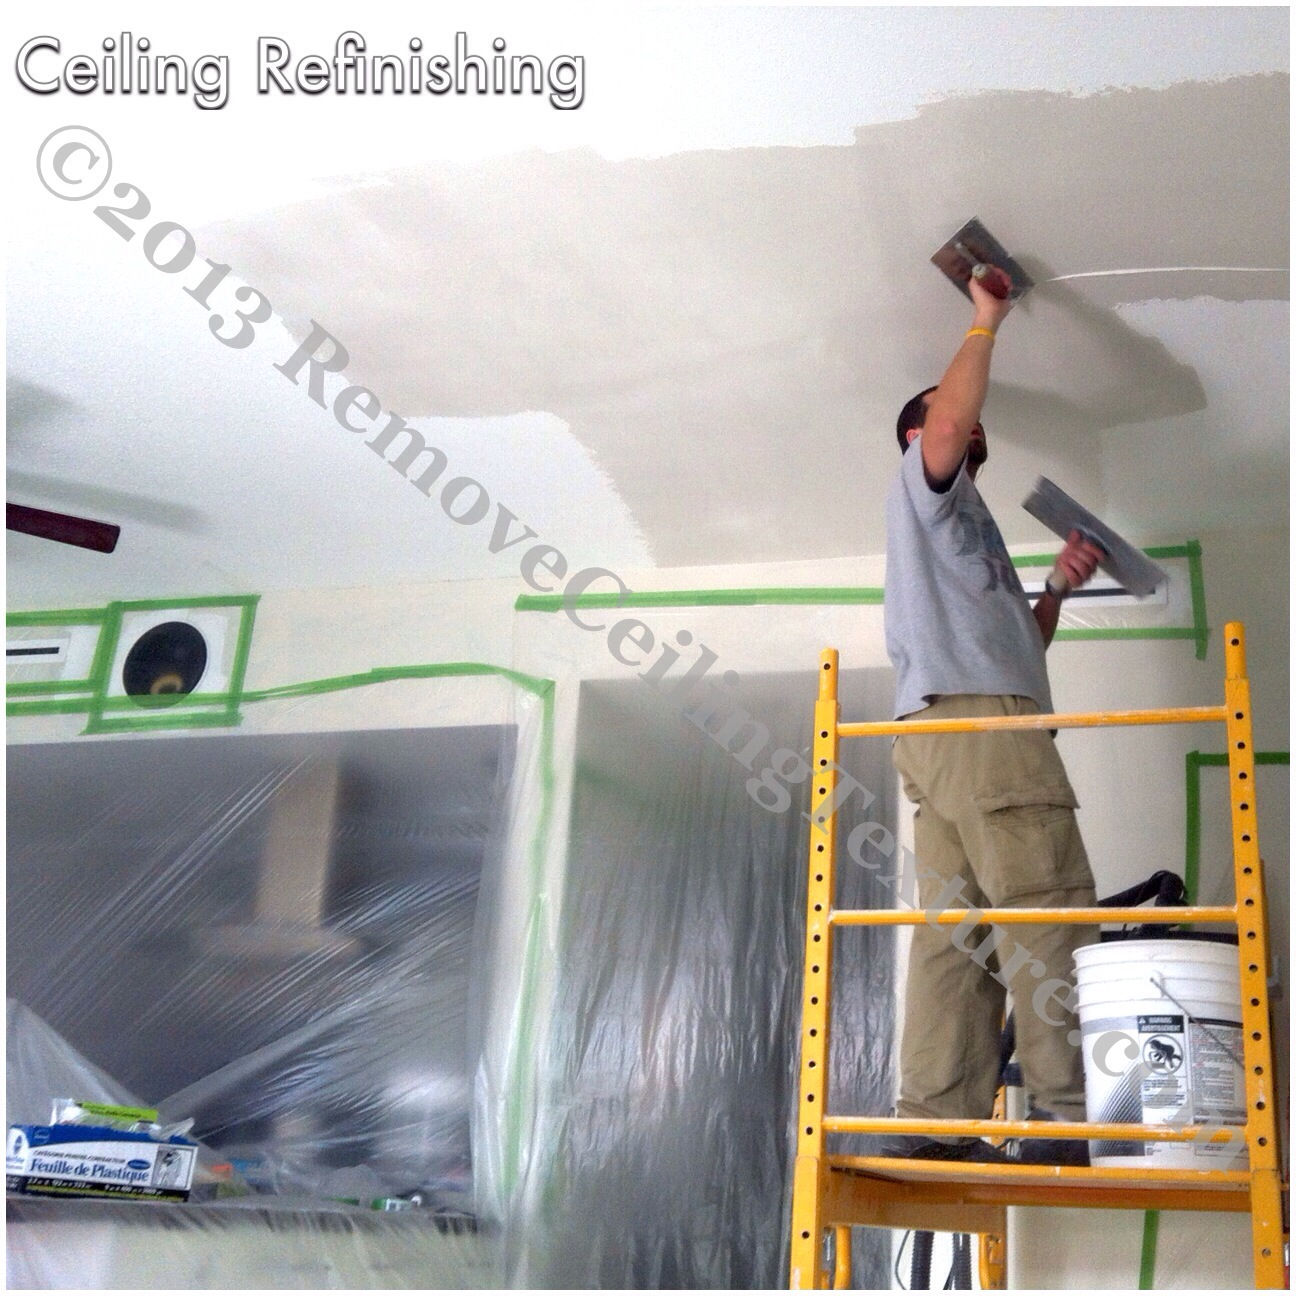 Ceiling refinishing using the same method used by plaster artisans